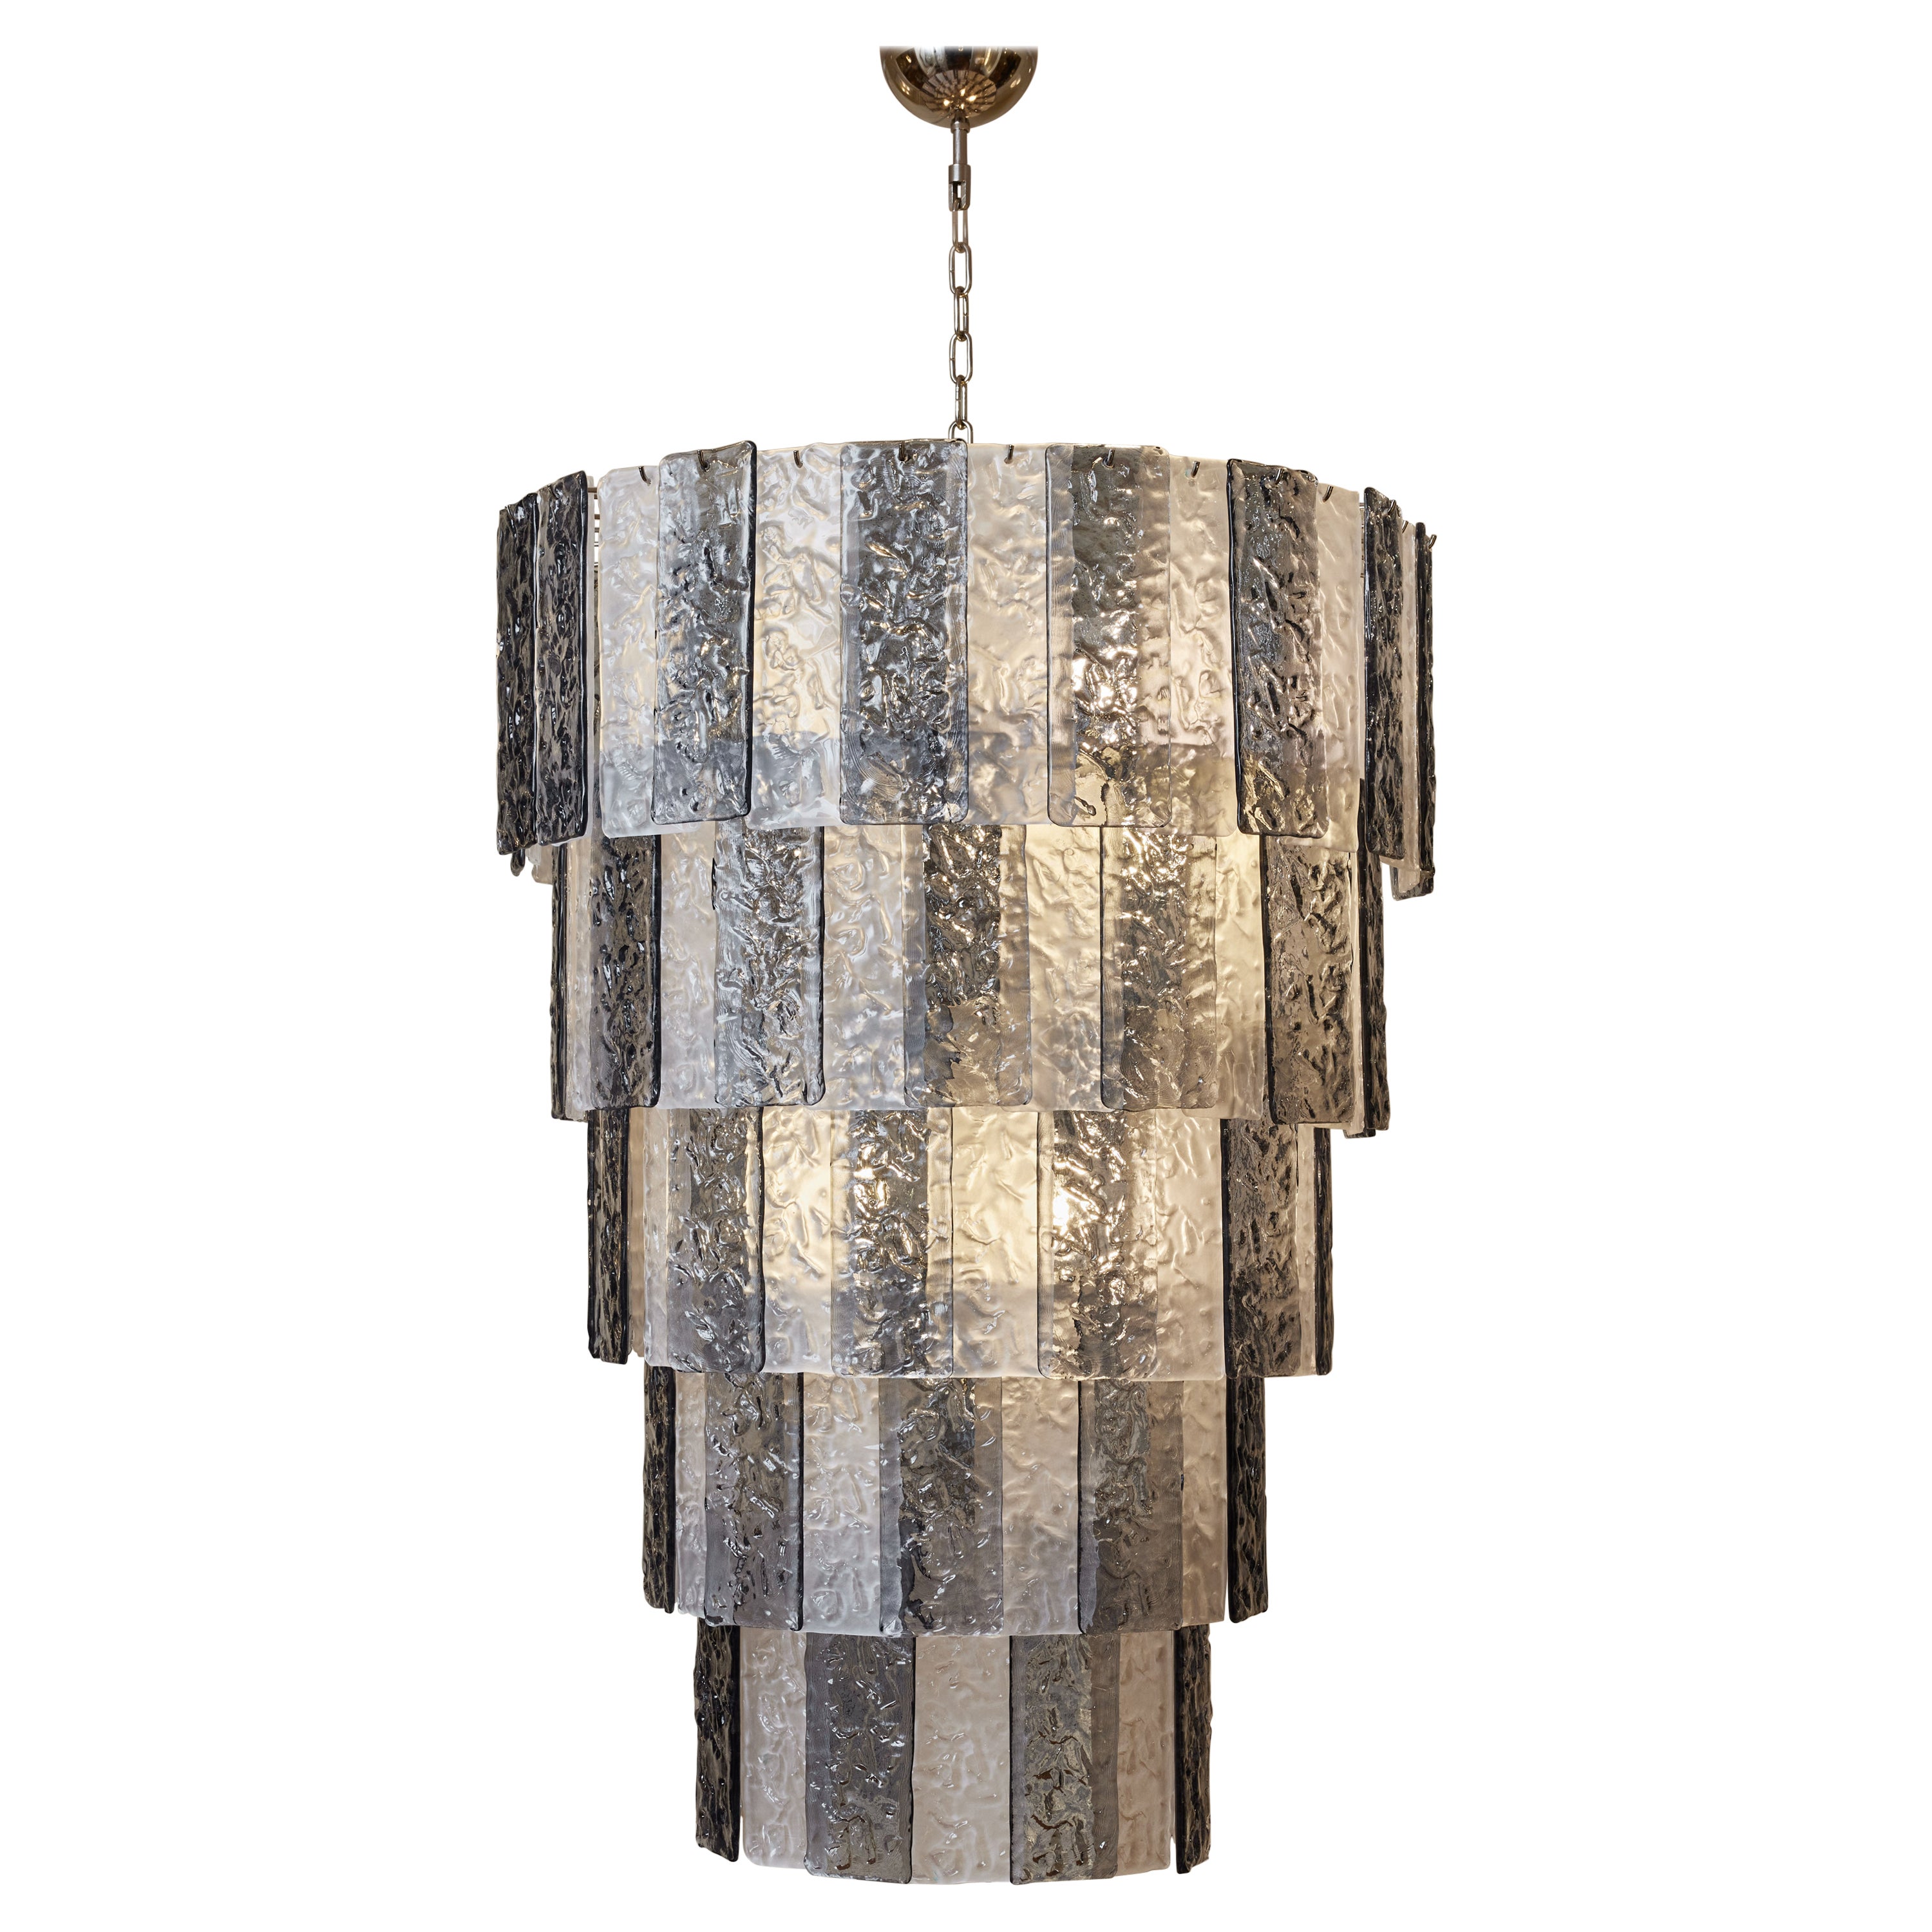 Murano glass chandelier by Studio Glustin. For Sale